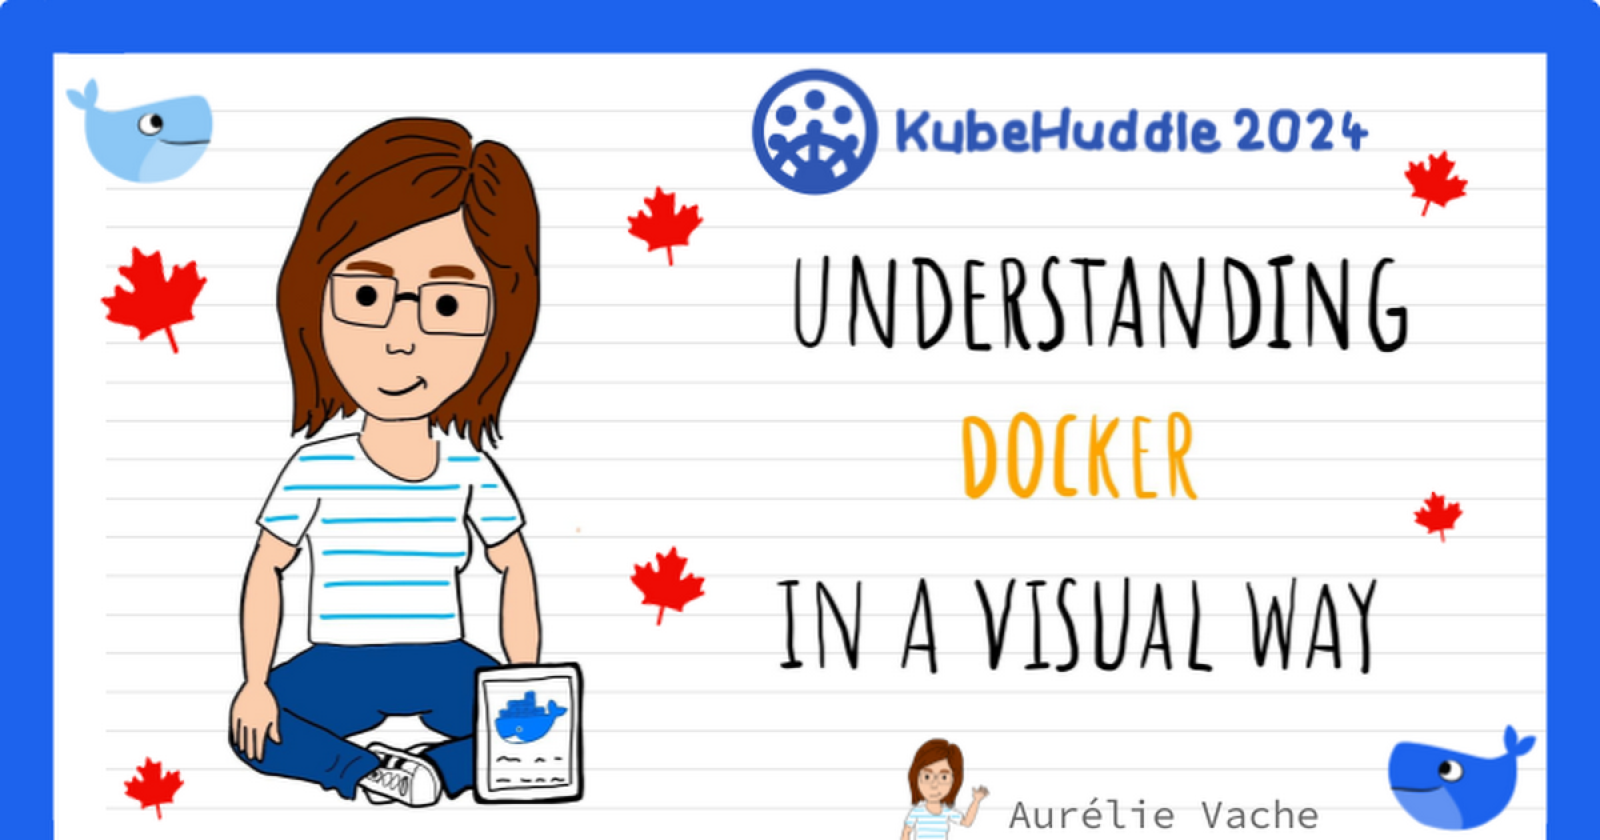 Understanding Docker in a visual way by Aurélie Vache